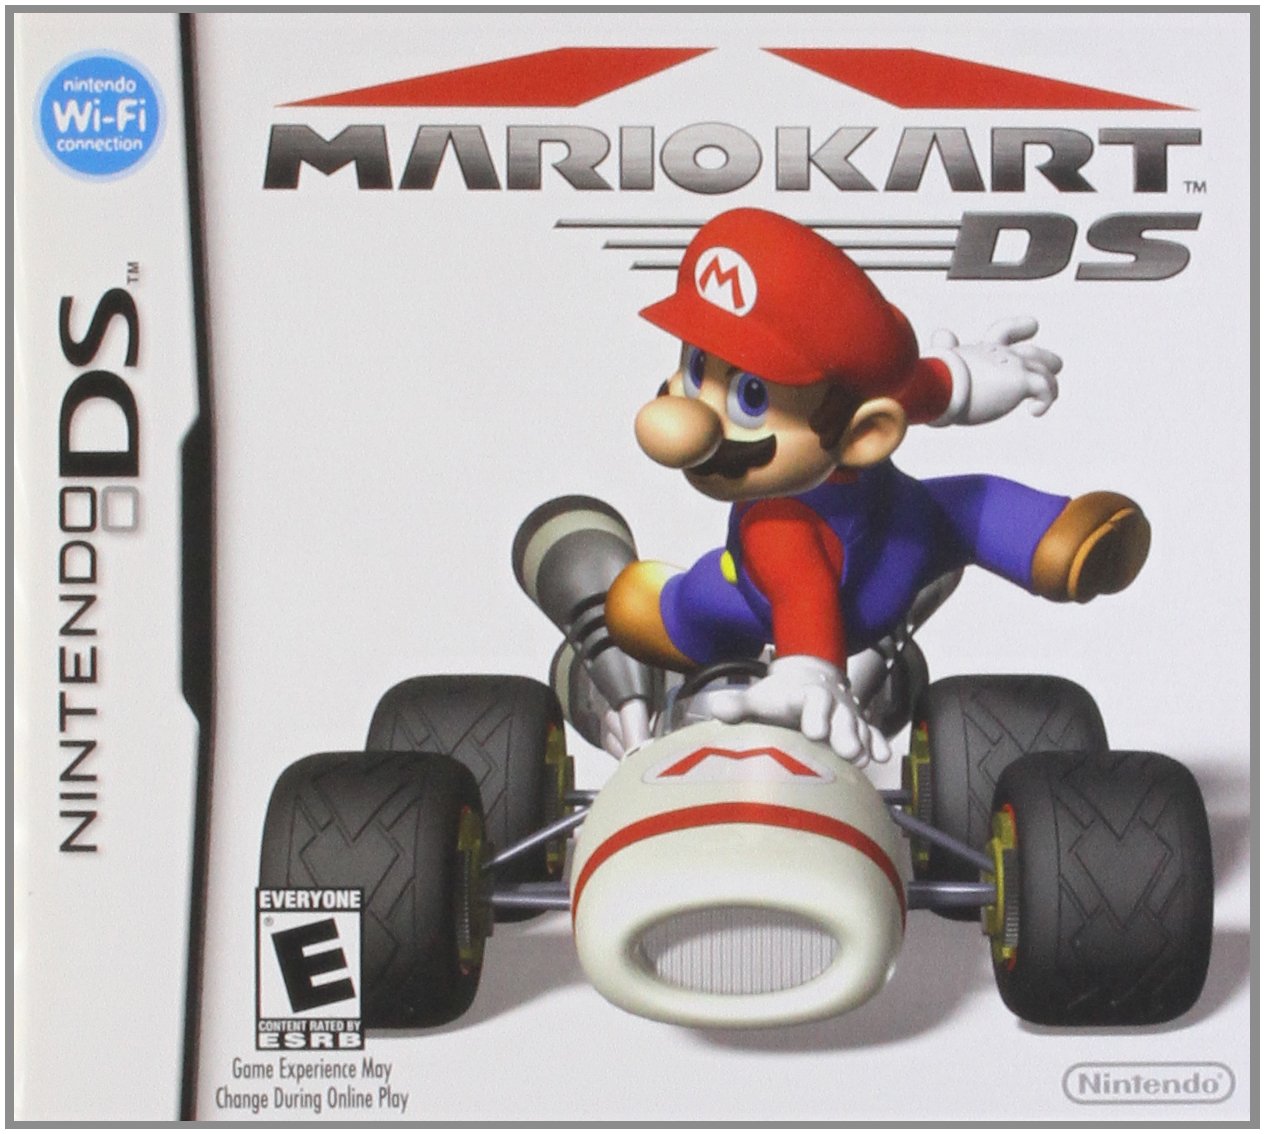 Mario Kart DS box cover (2005)